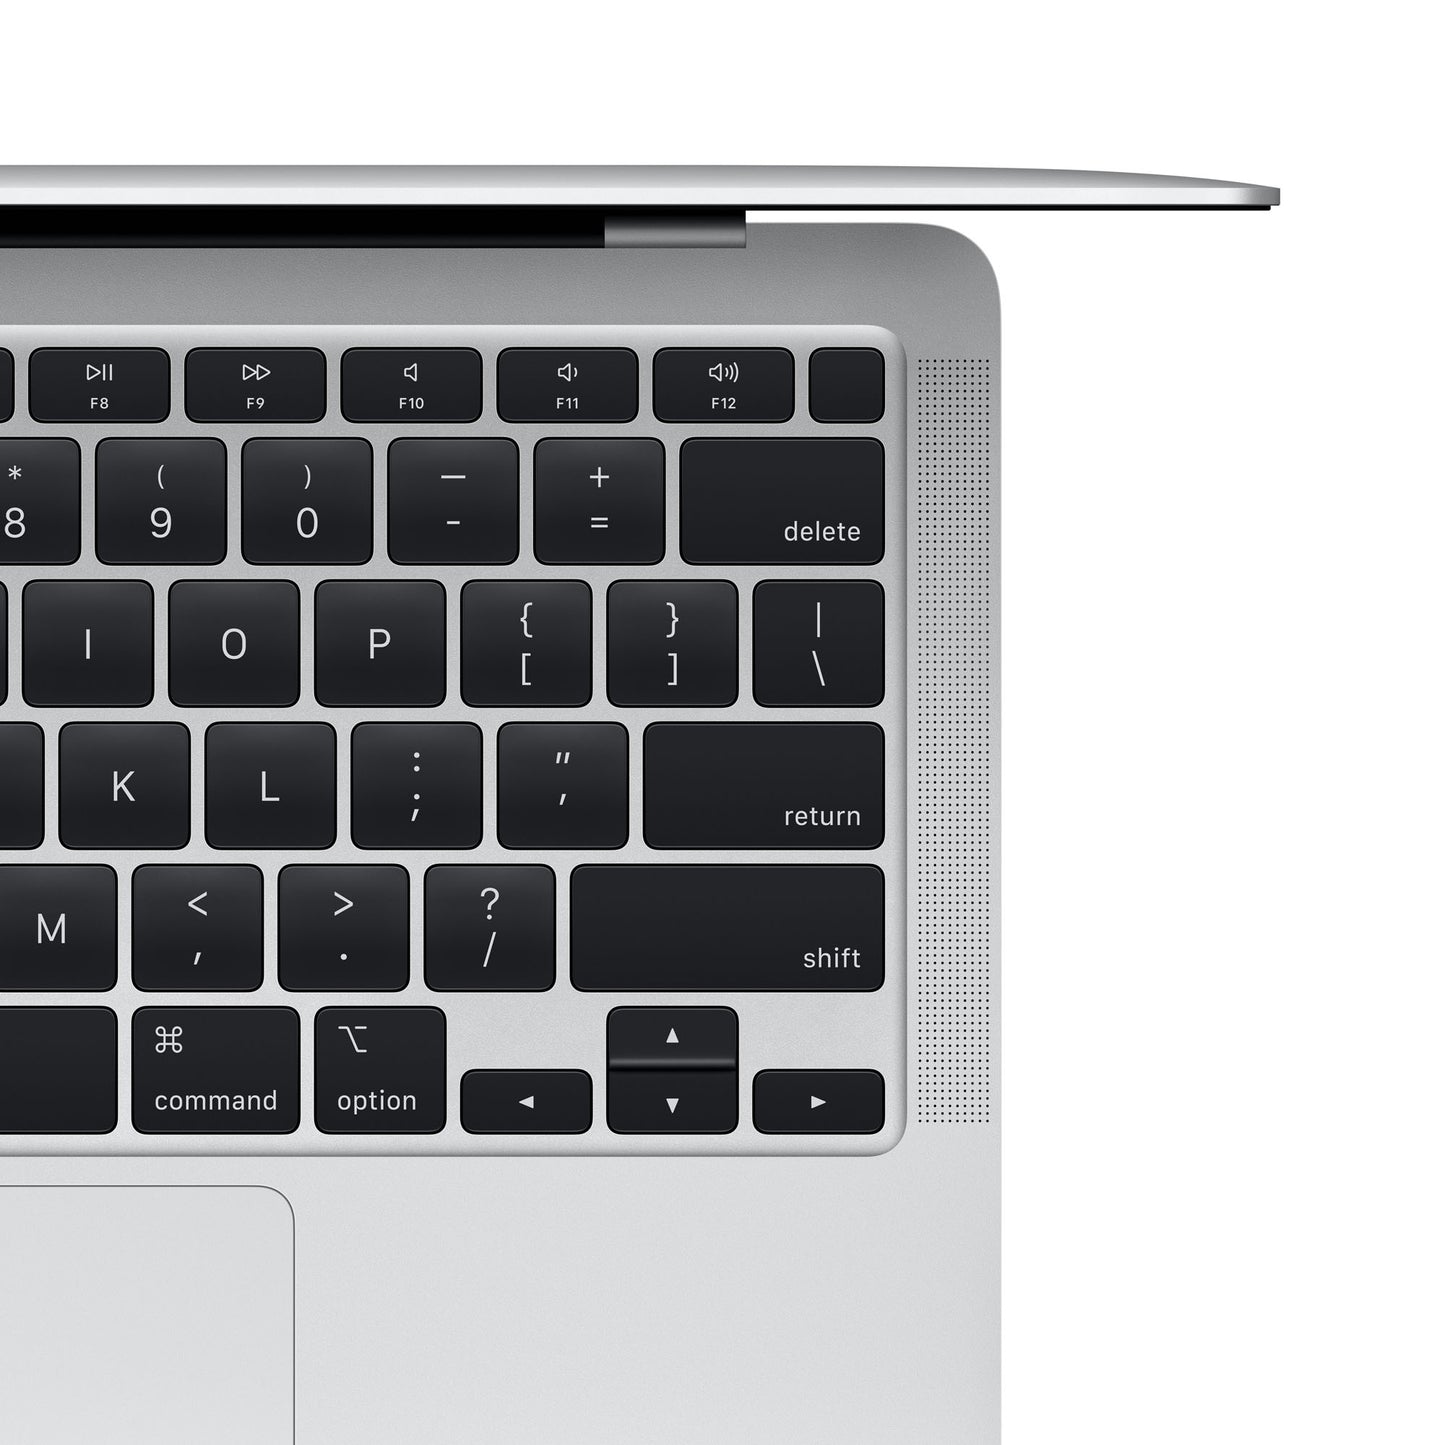 13-inch MacBook Air: Apple M1 chip with 8-core CPU and 7-core GPU 256GB - Silver